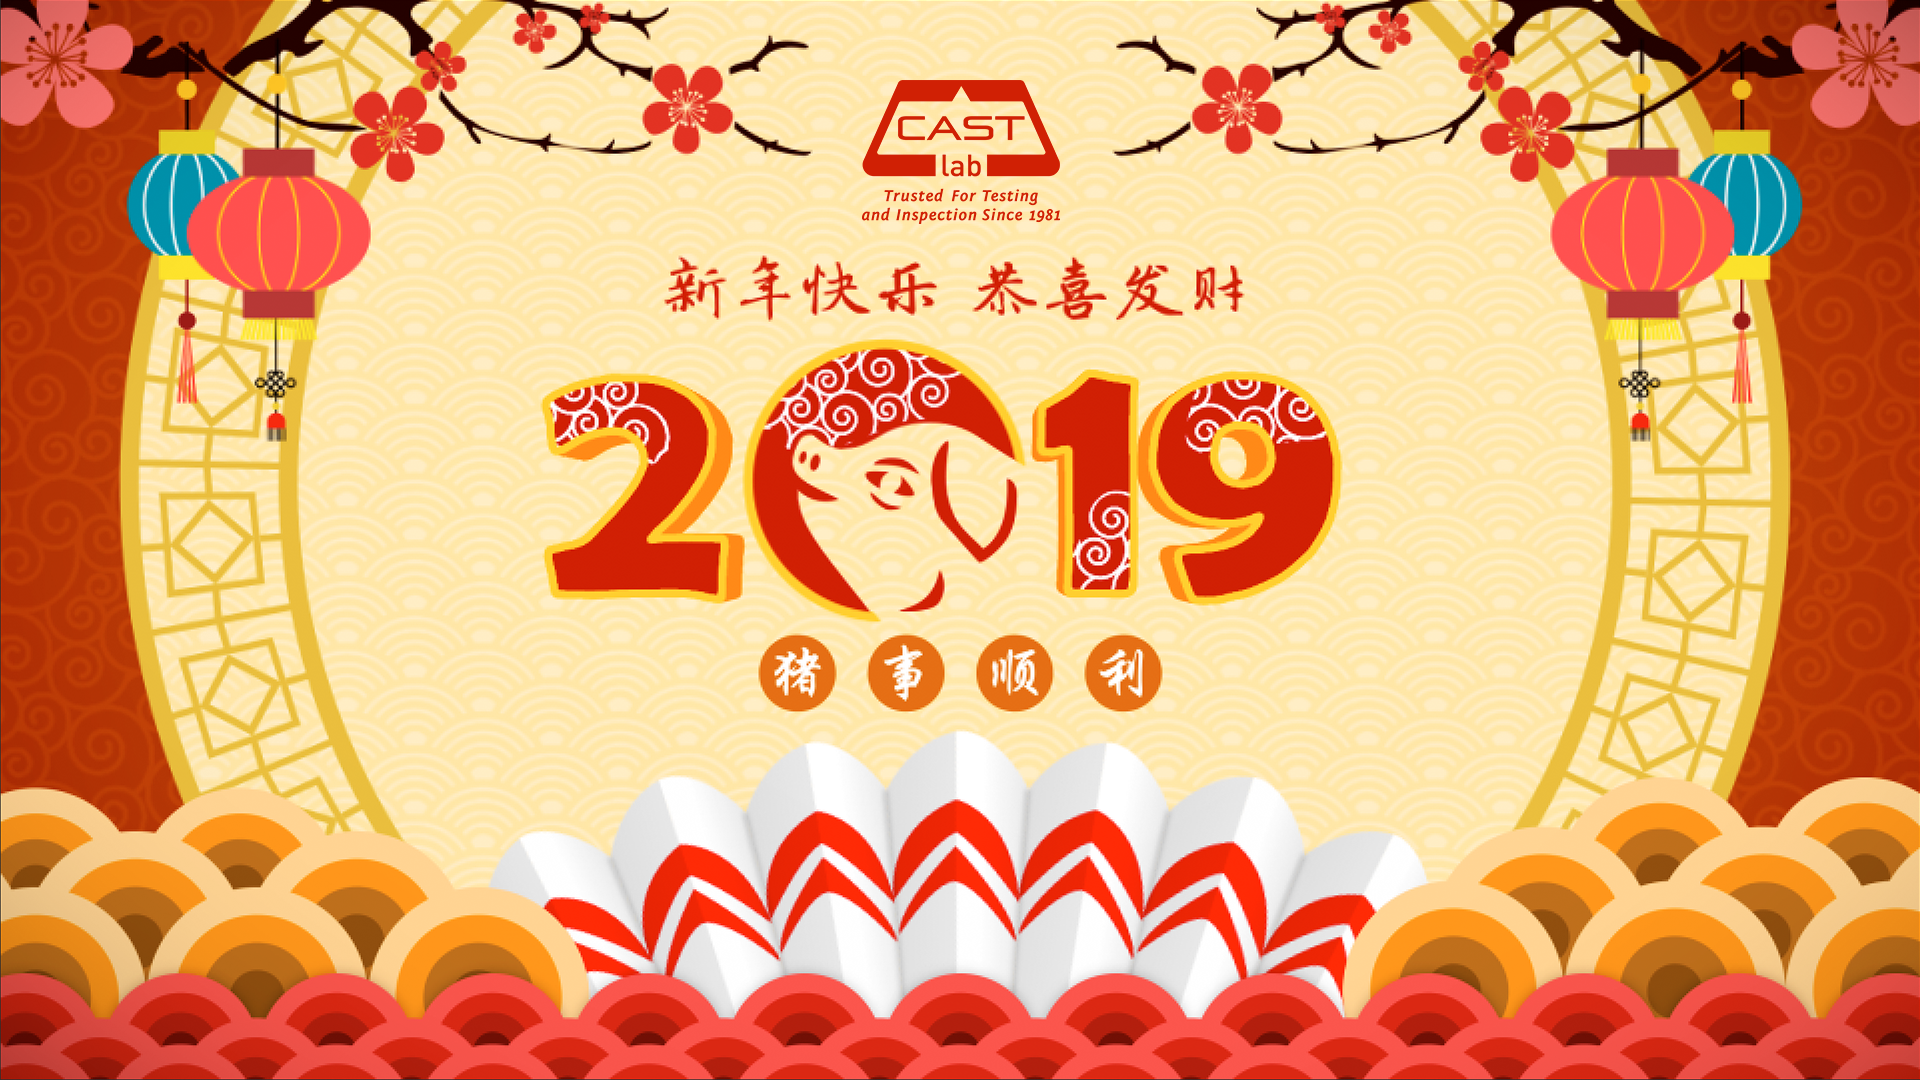 Lunar New Year 2019 Office Closure